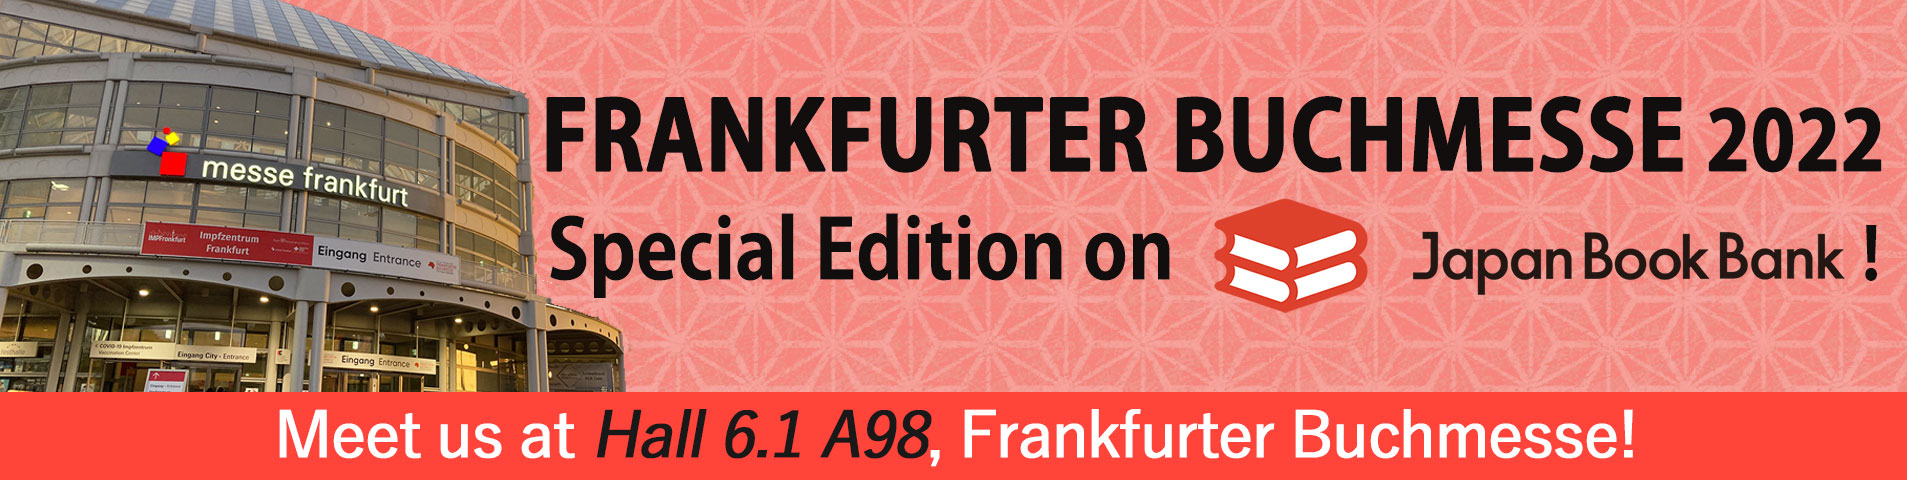 FRANKFURTER BUCHMESSE 2022 Special Edition on Japan Book Bank